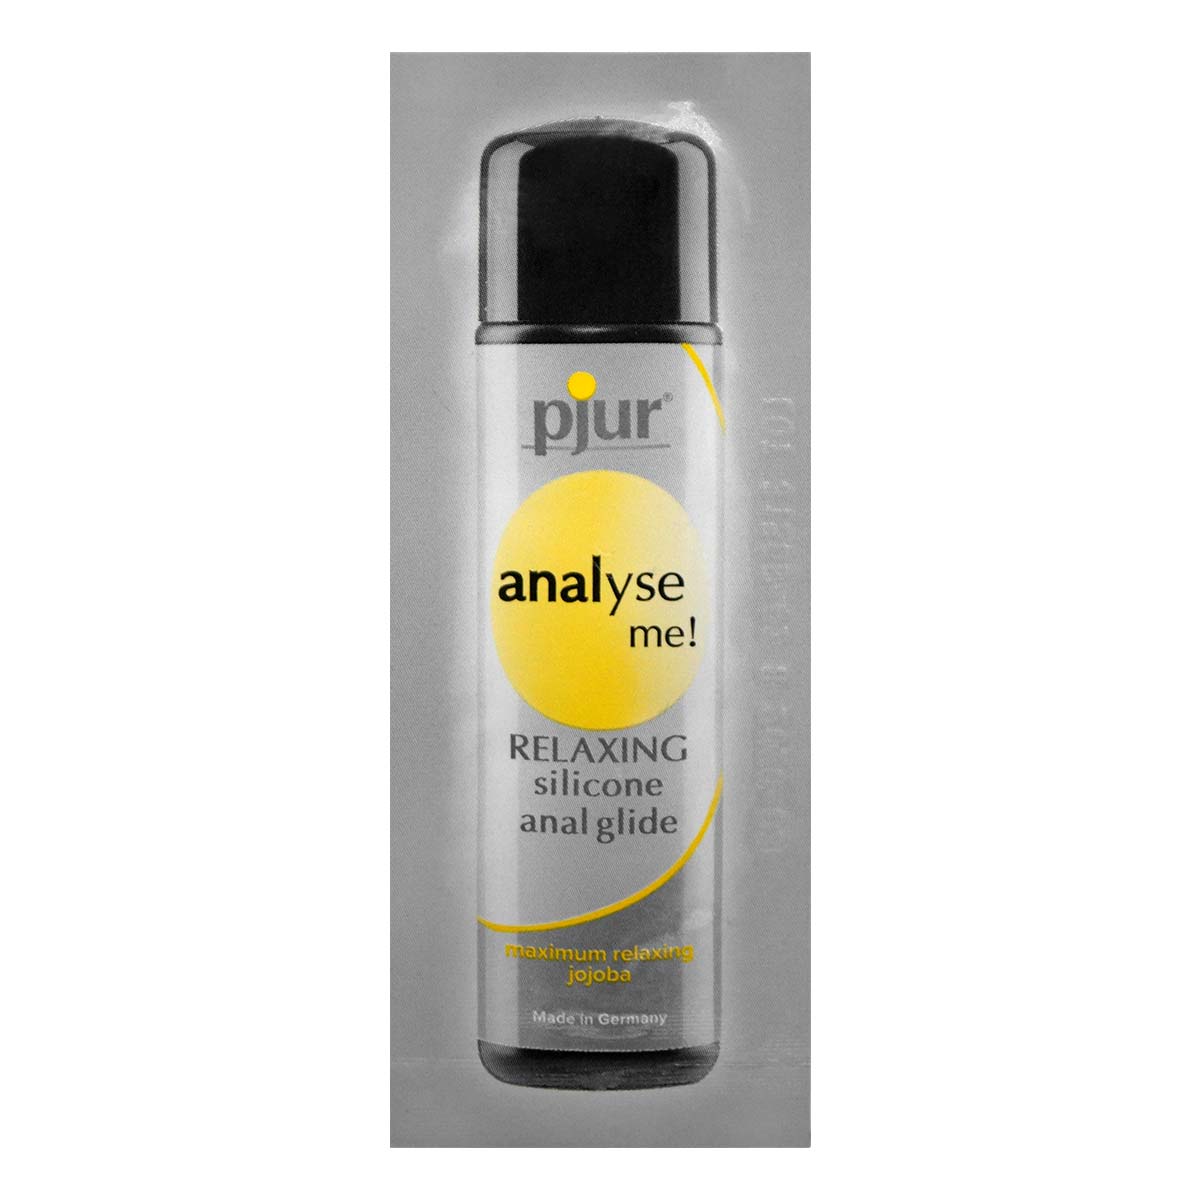 pjur analyse me! RELAXING 輕鬆肛交 2ml 矽性潤滑液-p_2